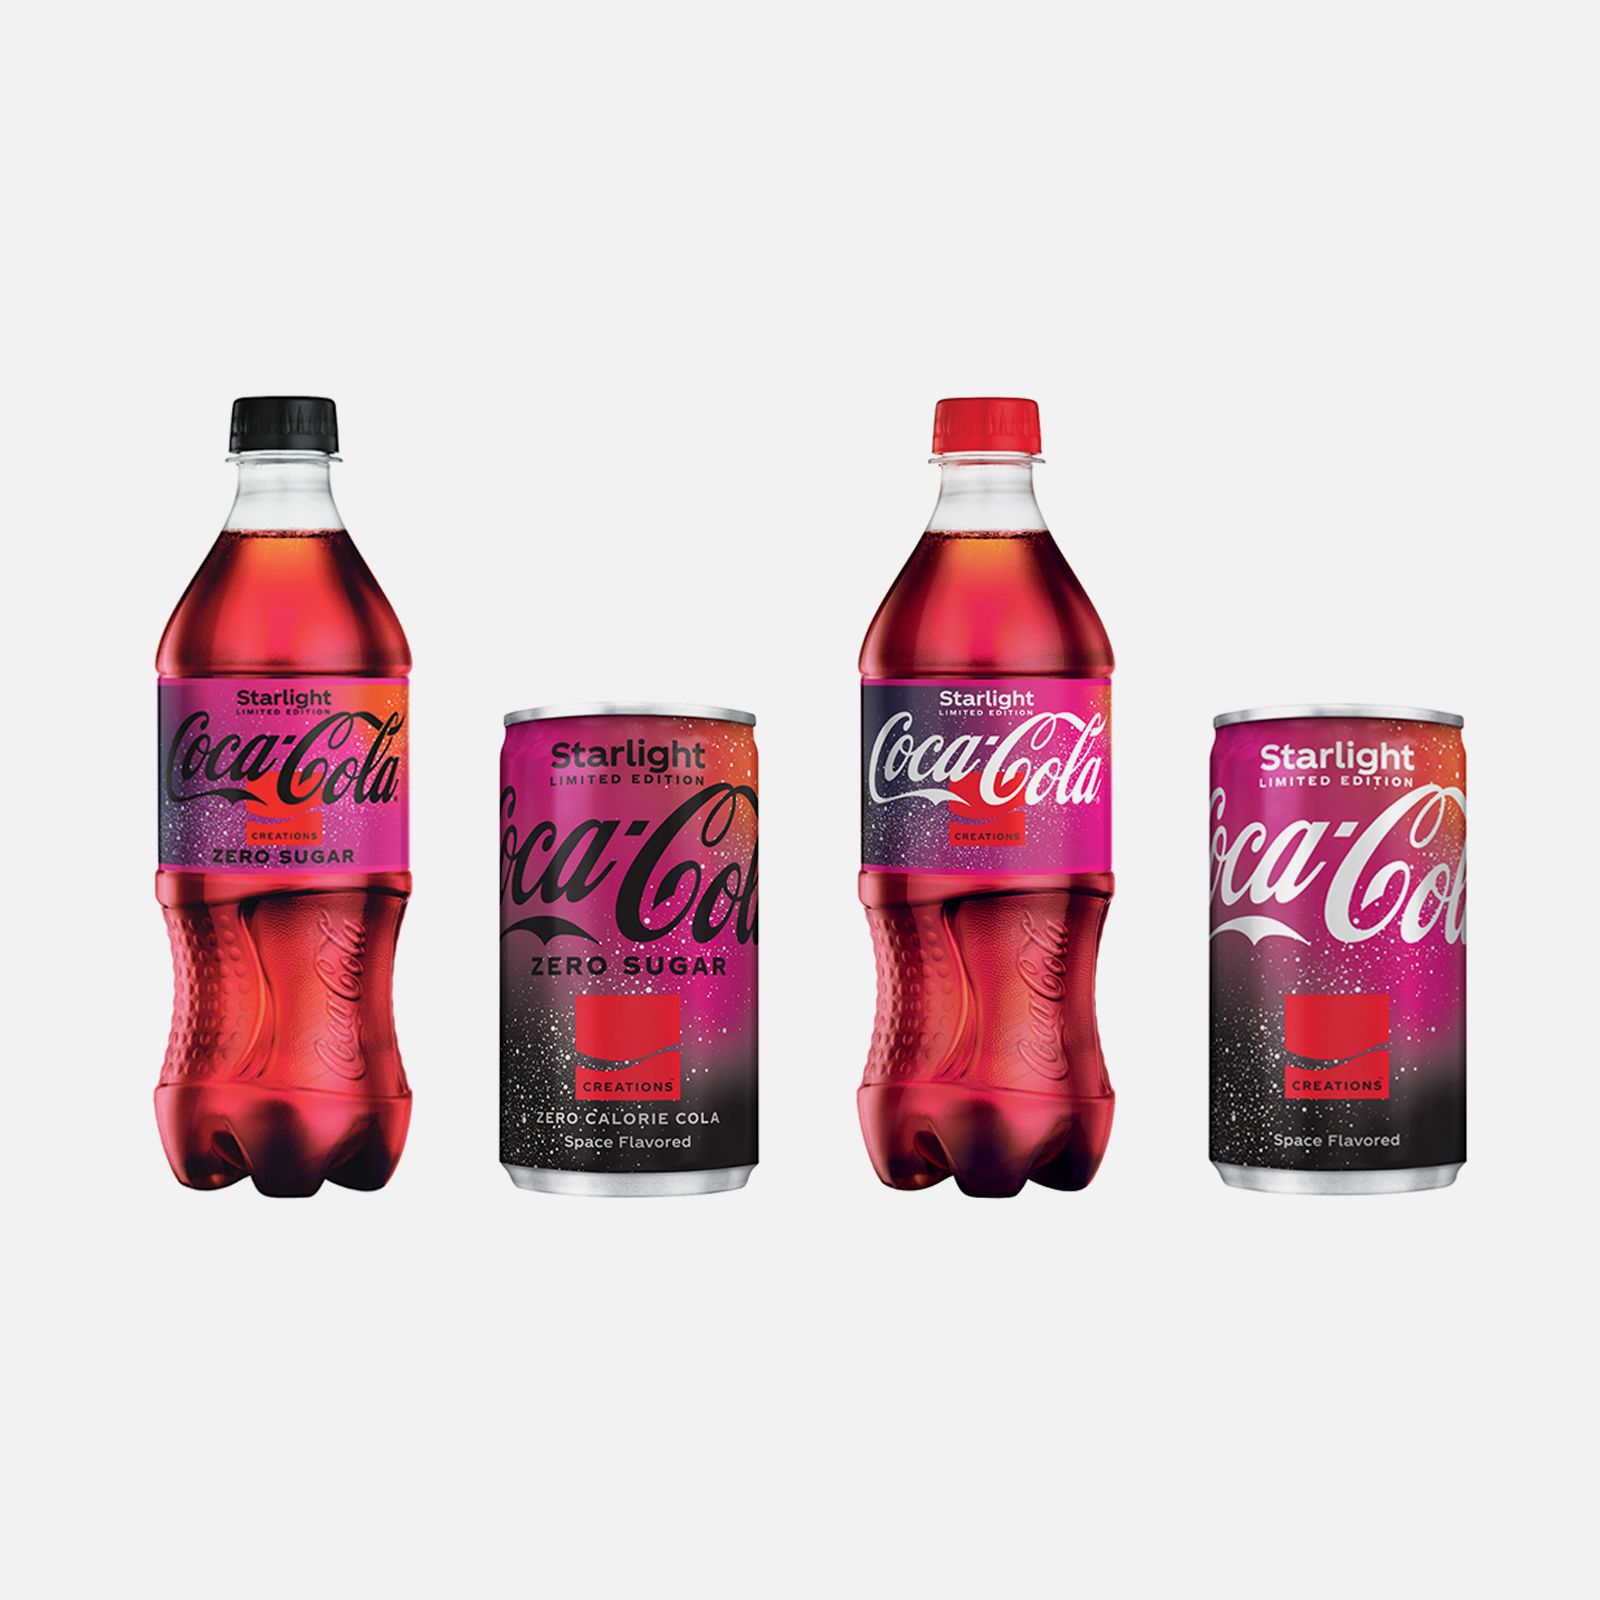 Coca-Cola Starlight: Coke's new flavor is this world | CNN Business